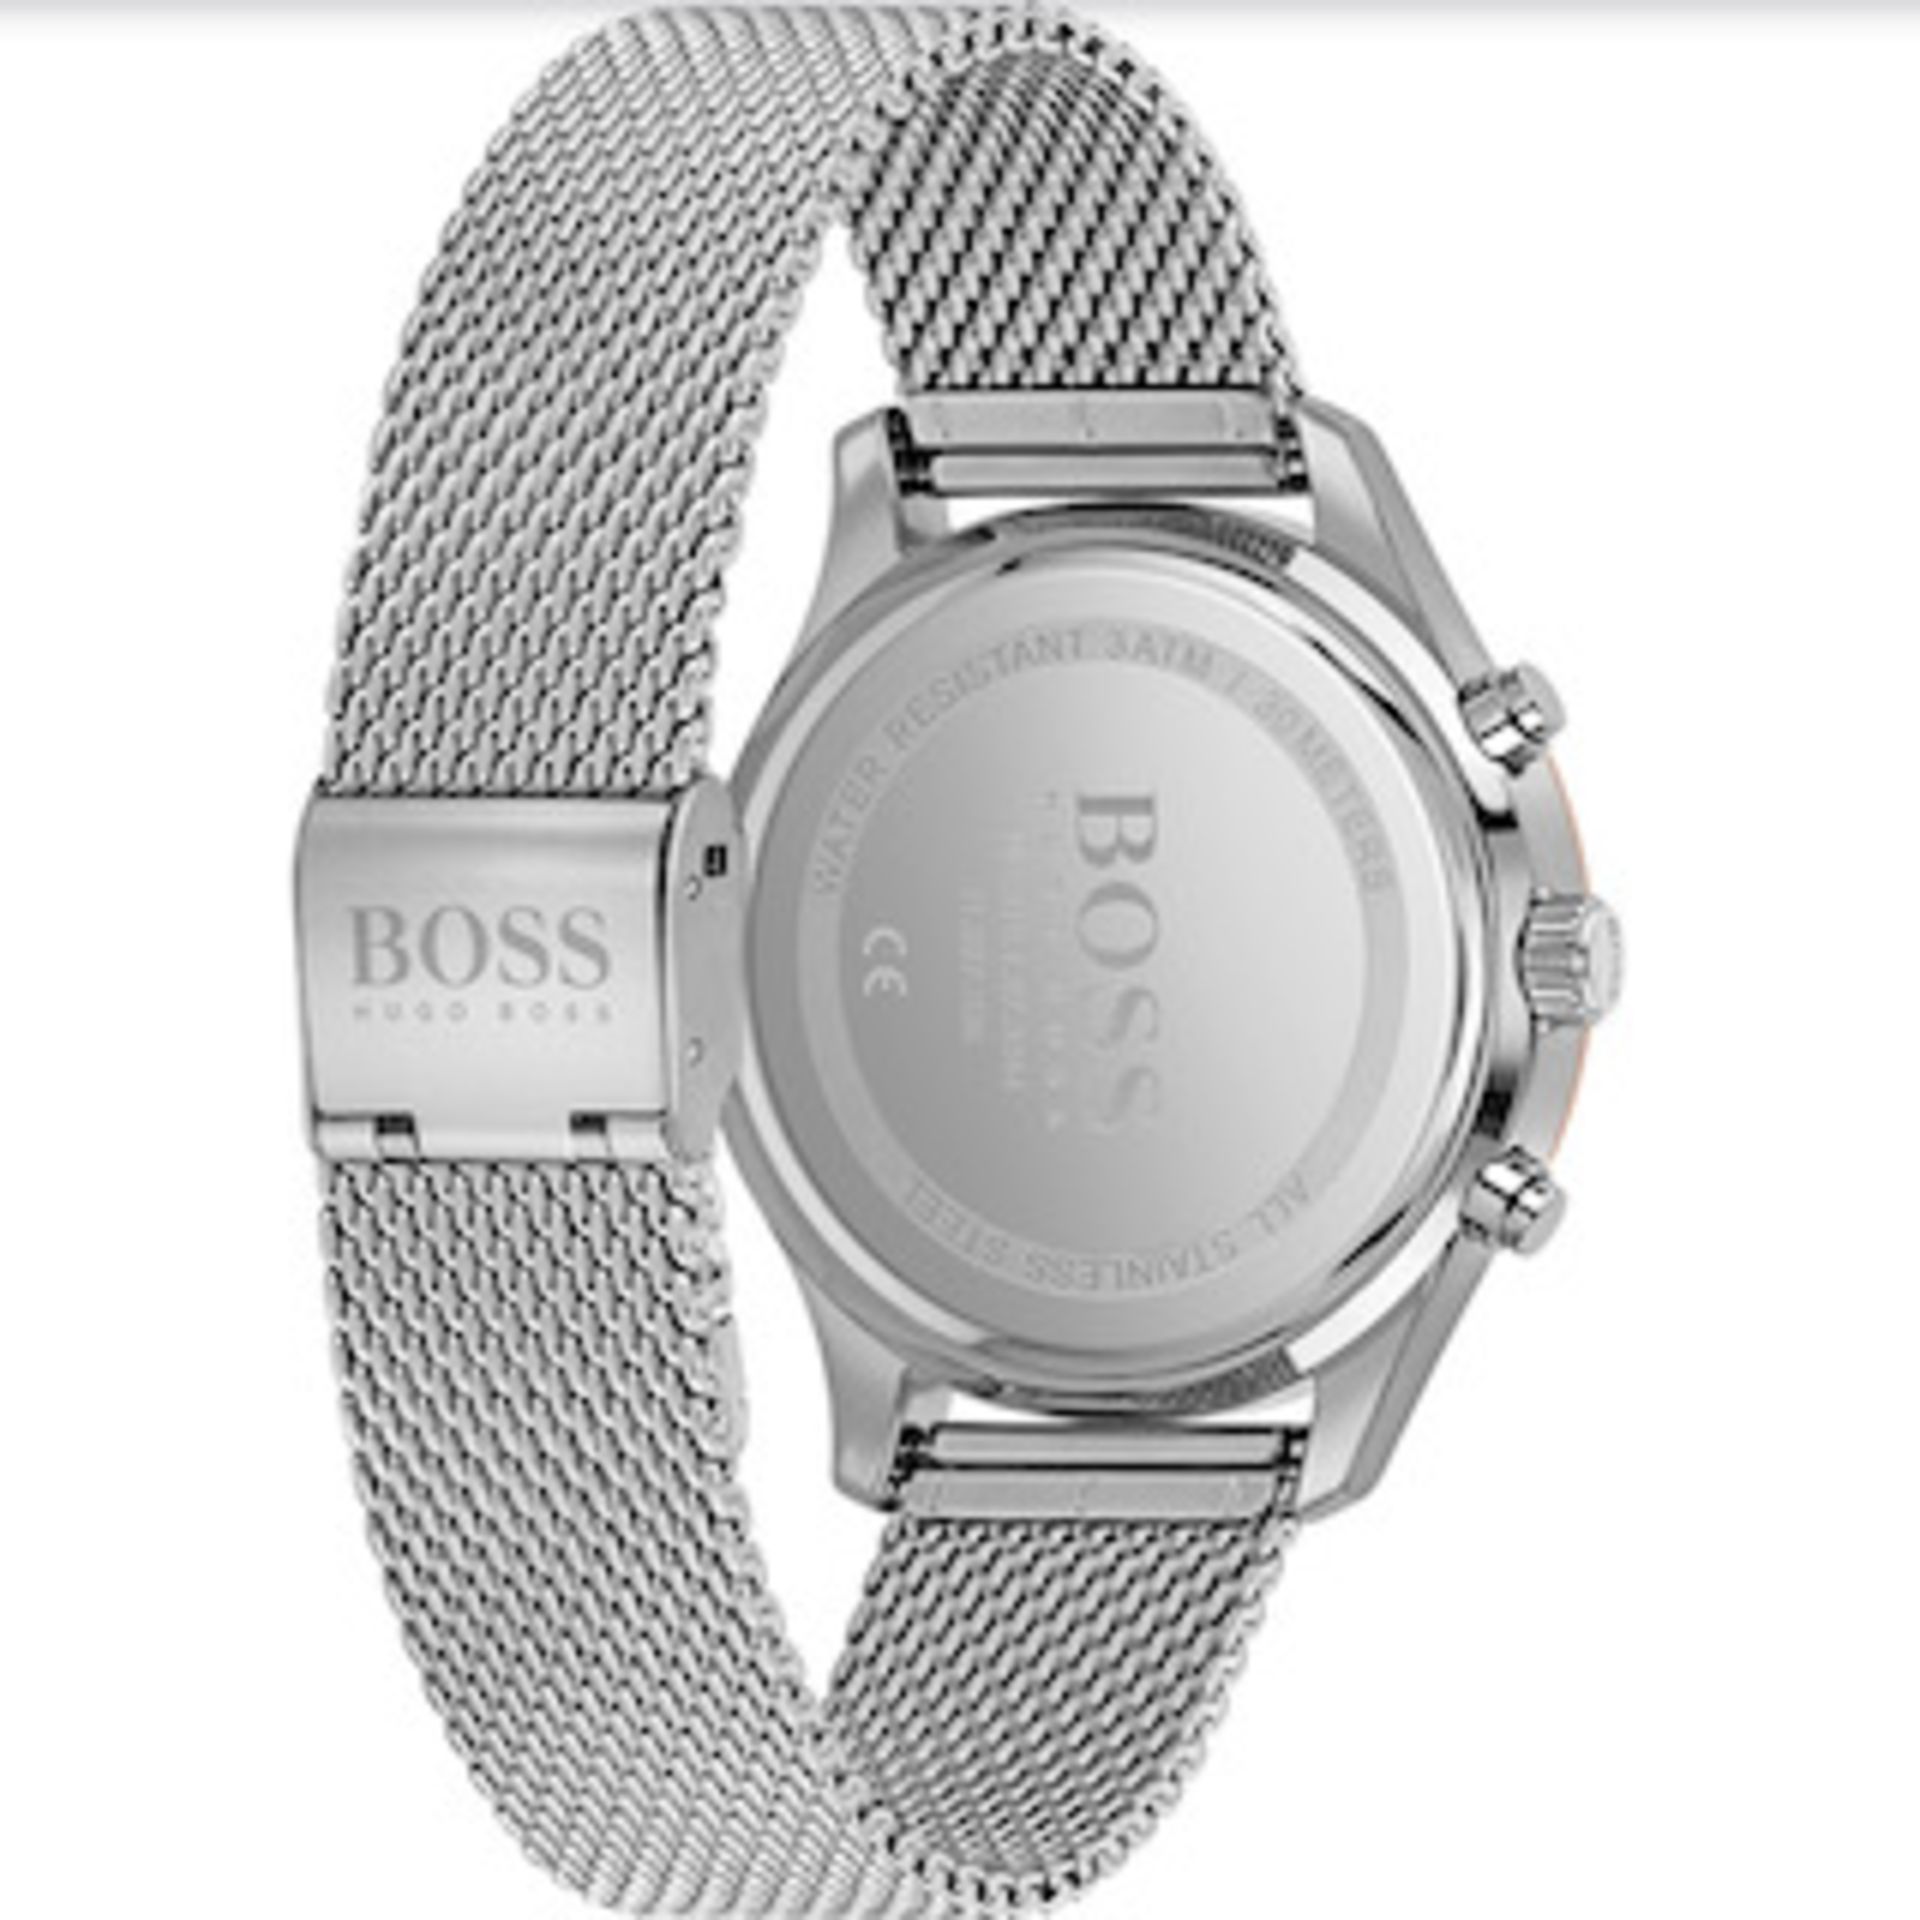 Hugo Boss 1513805 Men's Associate Stainless Steel Mesh Band Chronograph Watch - Image 4 of 6